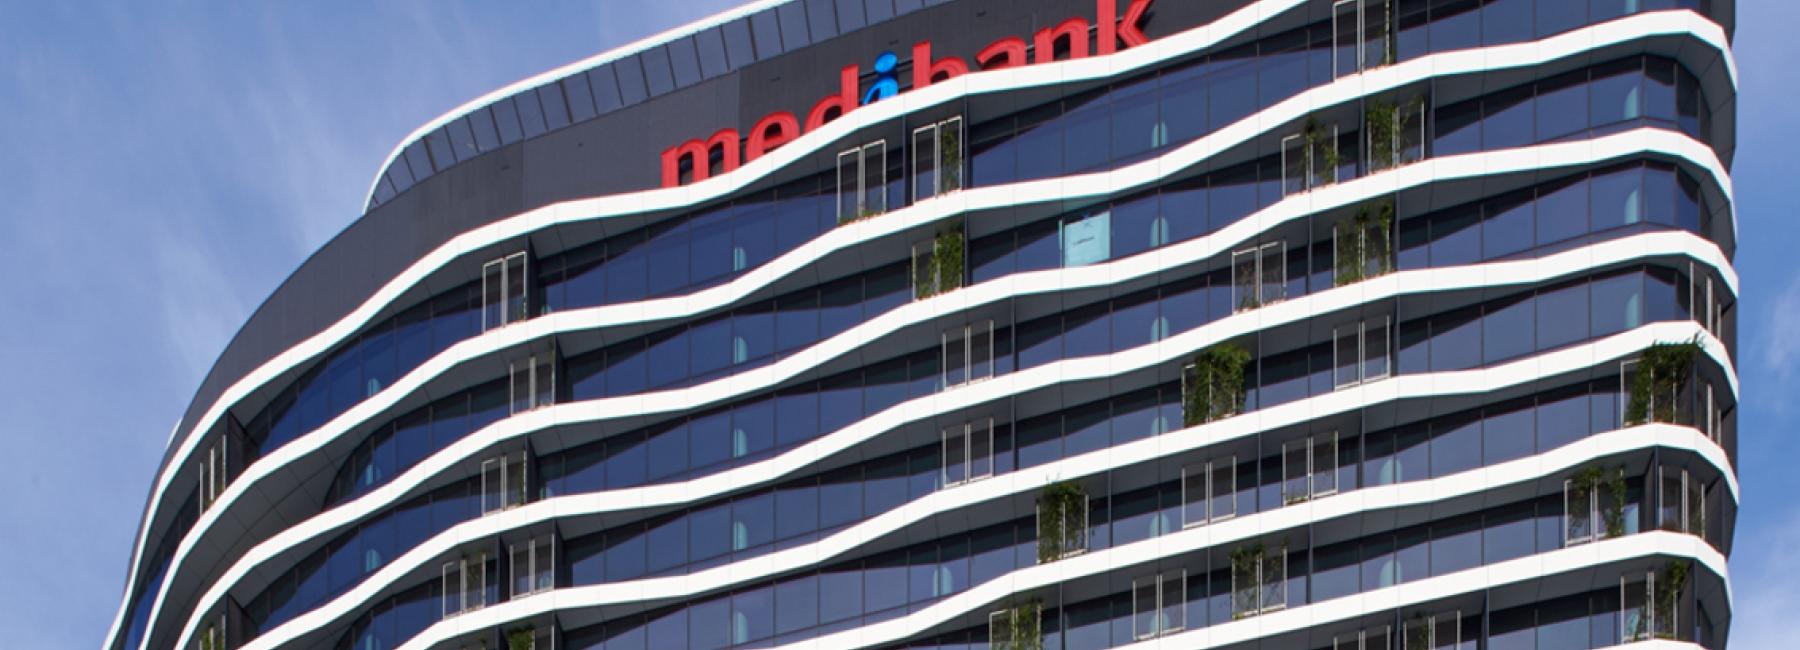 Medibank Private Headquarters 3